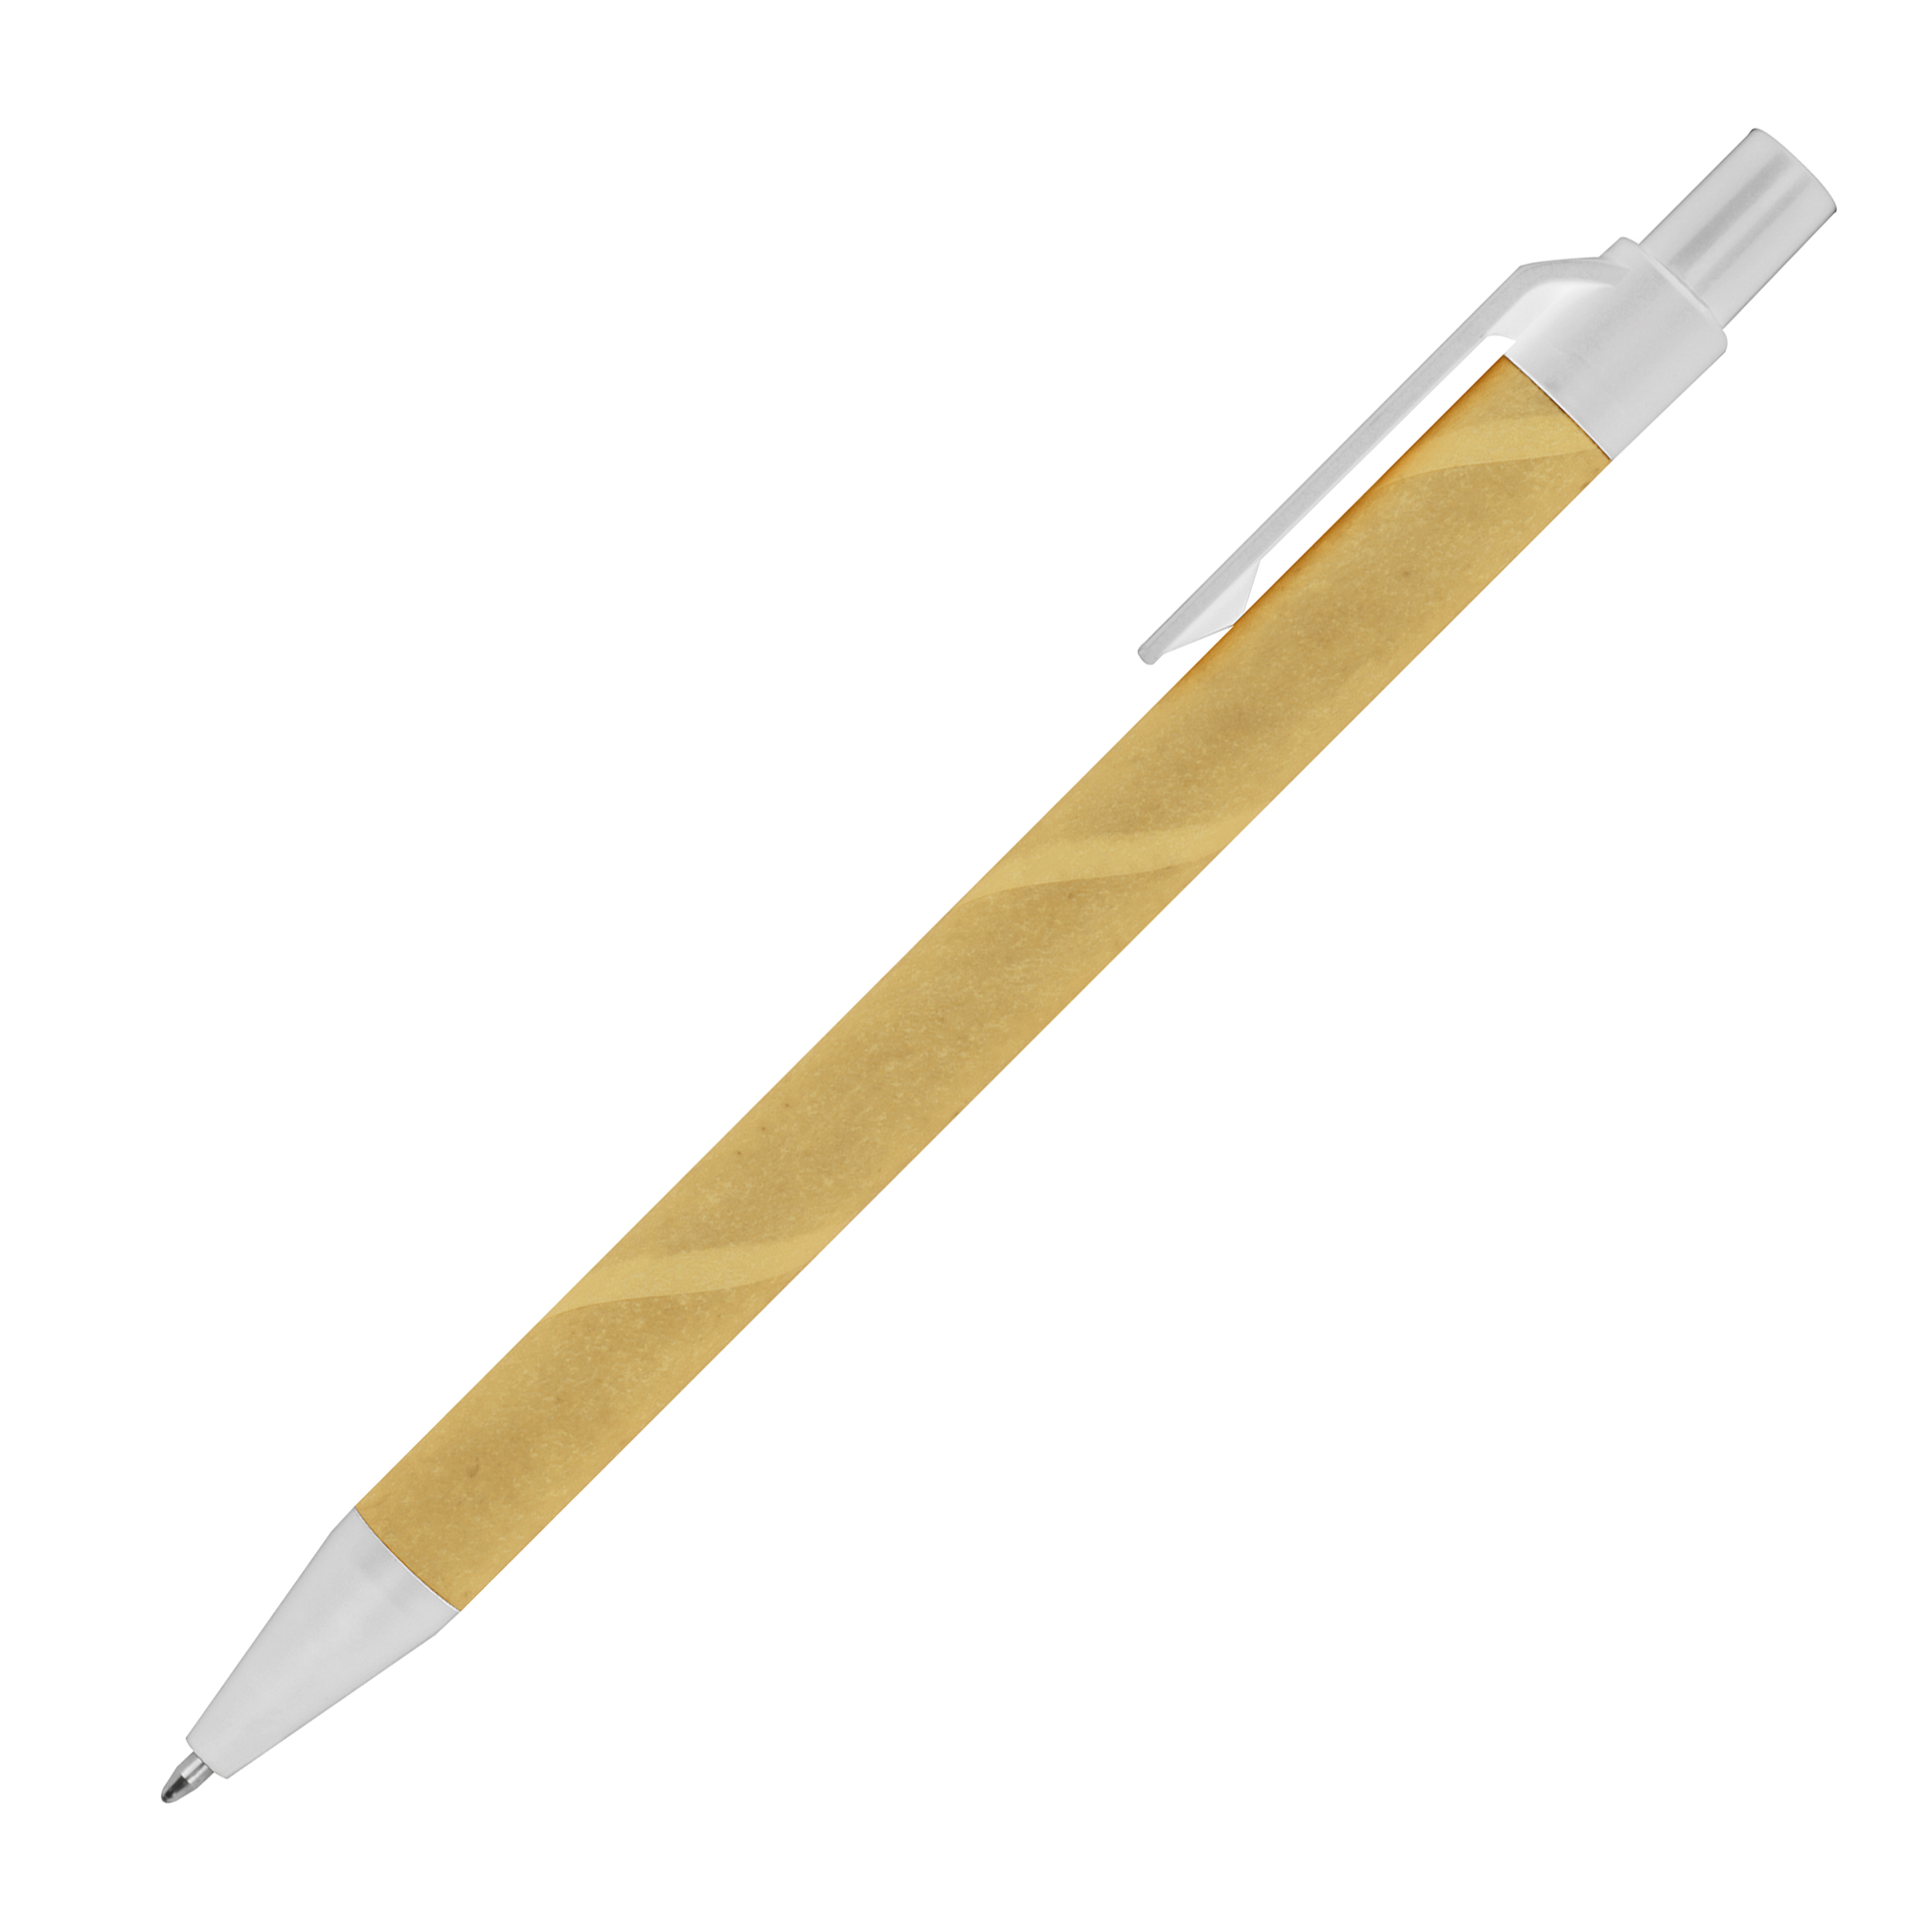 Paper pen